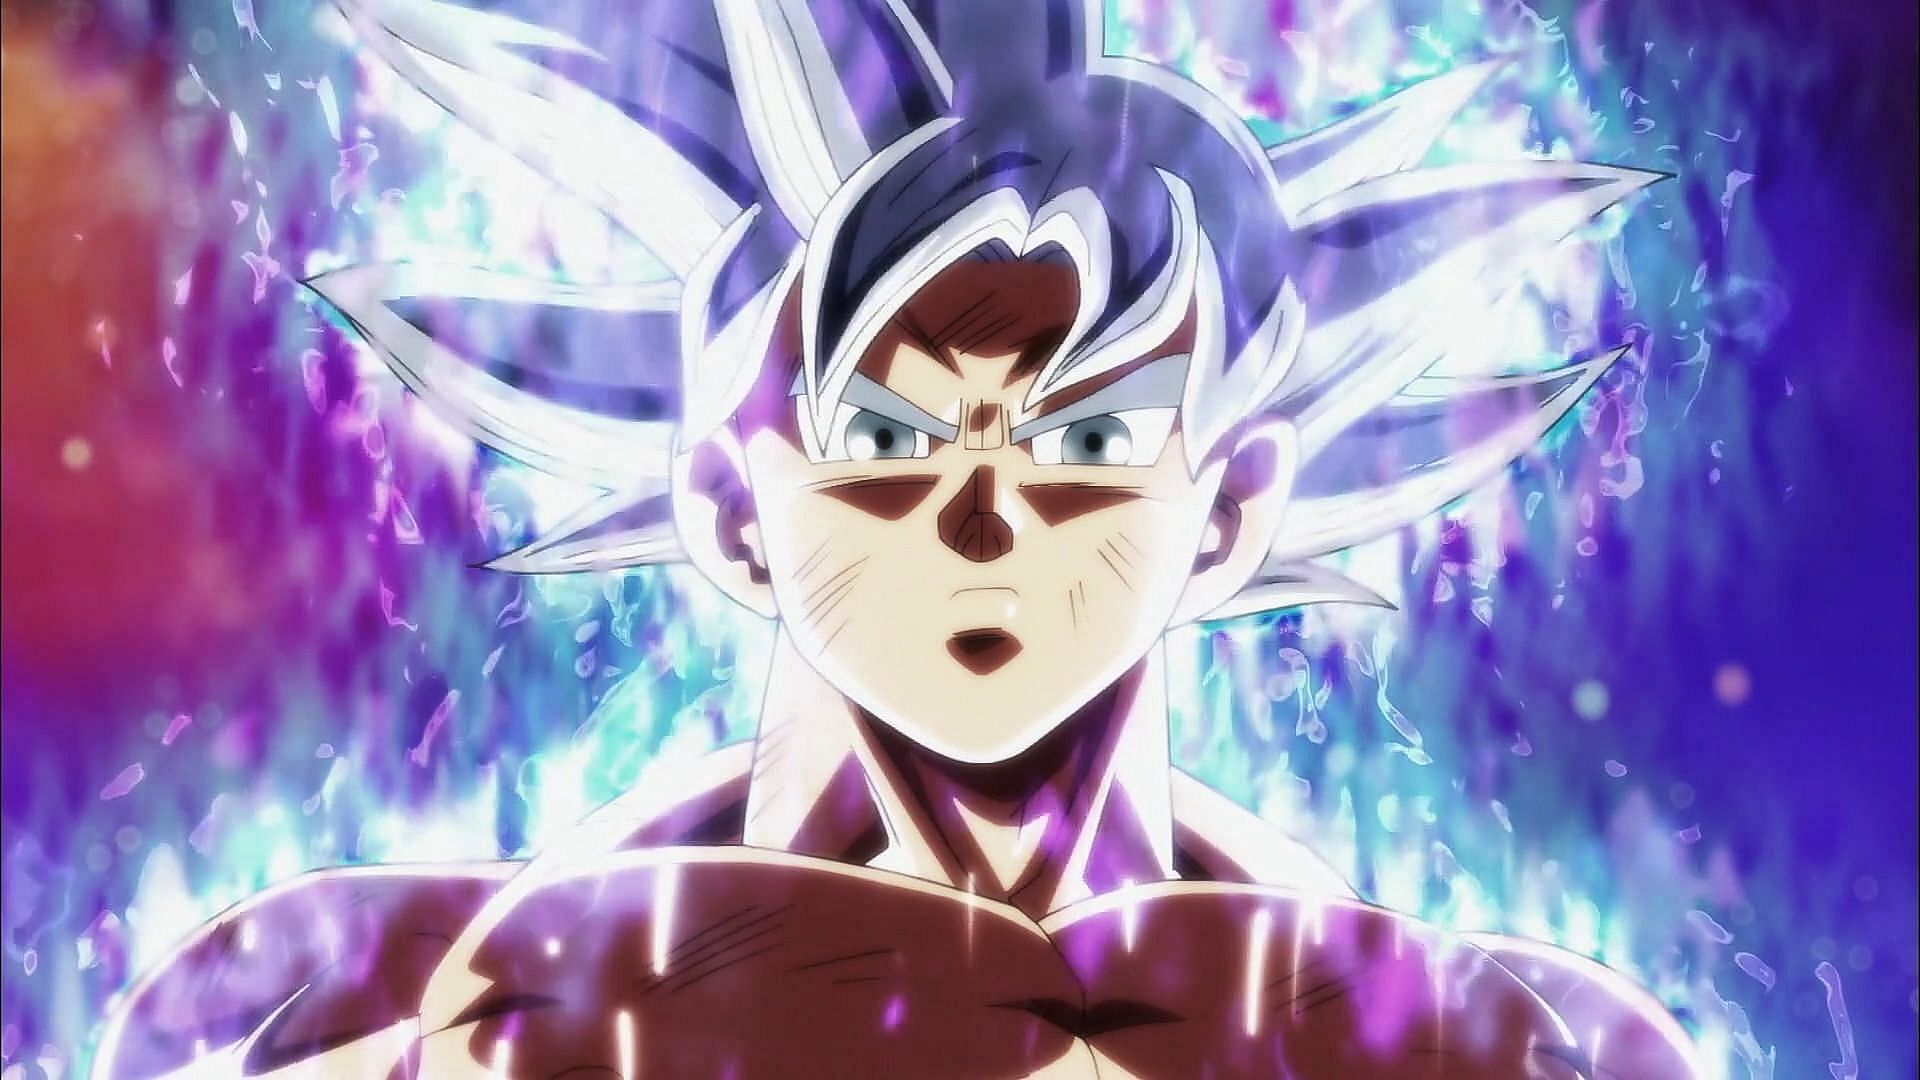 Goku as seen in Dragon Ball (Image via Studio Toei Animation)